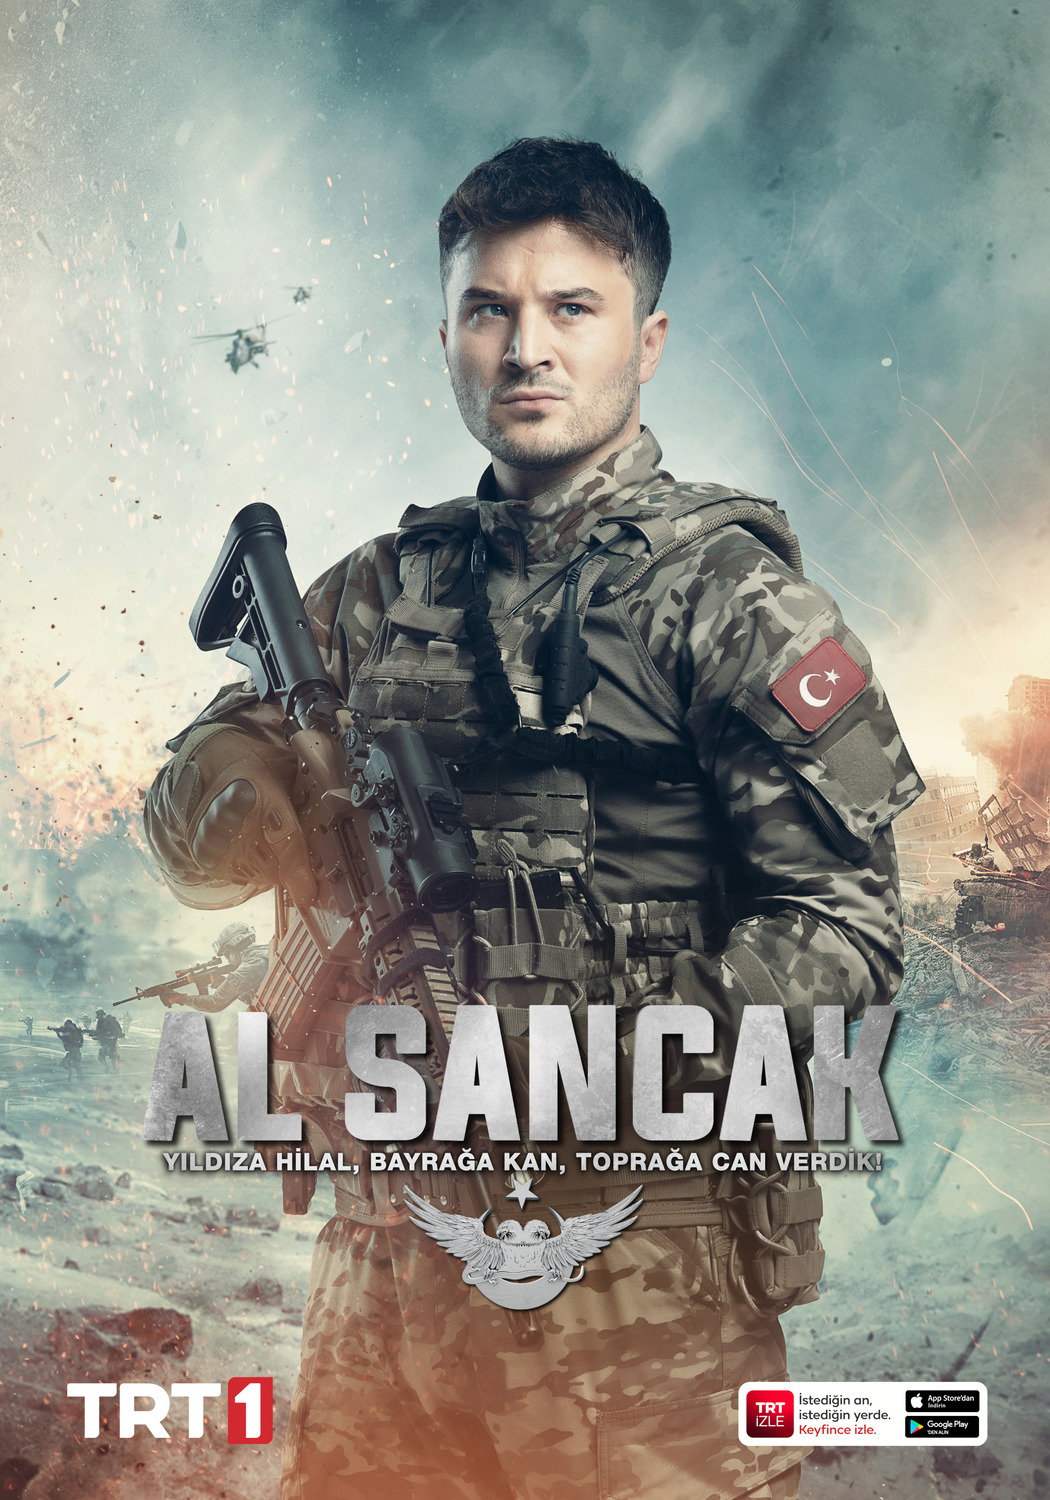 Extra Large TV Poster Image for Al Sancak (#16 of 20)